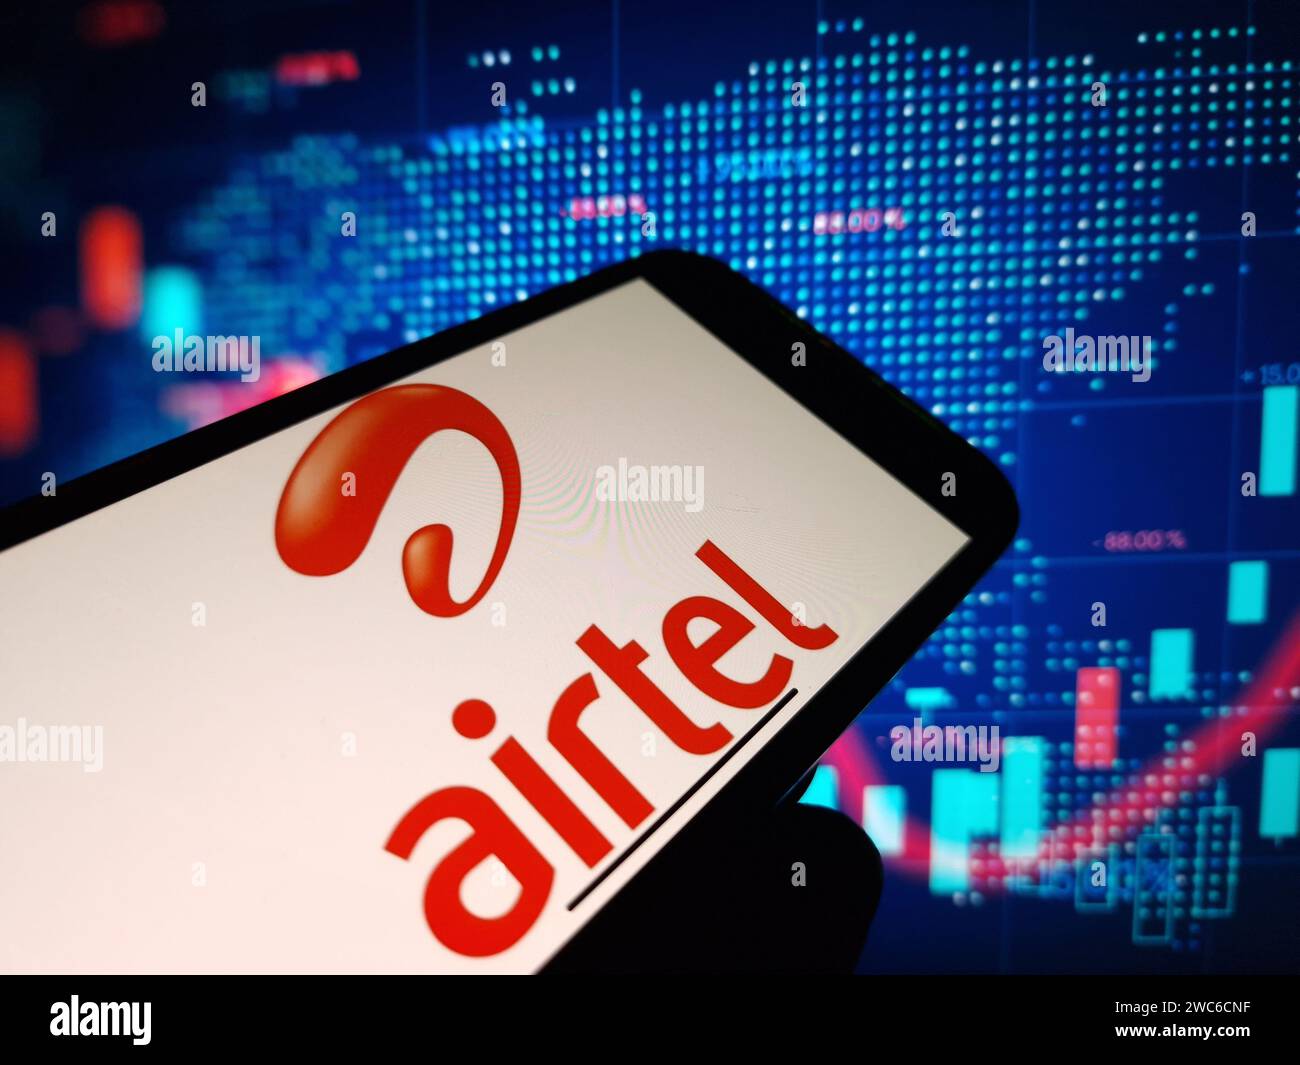 Konskie, Poland - January 13, 2024: Bharti Airtel company logo displayed on mobile phone screen Stock Photo